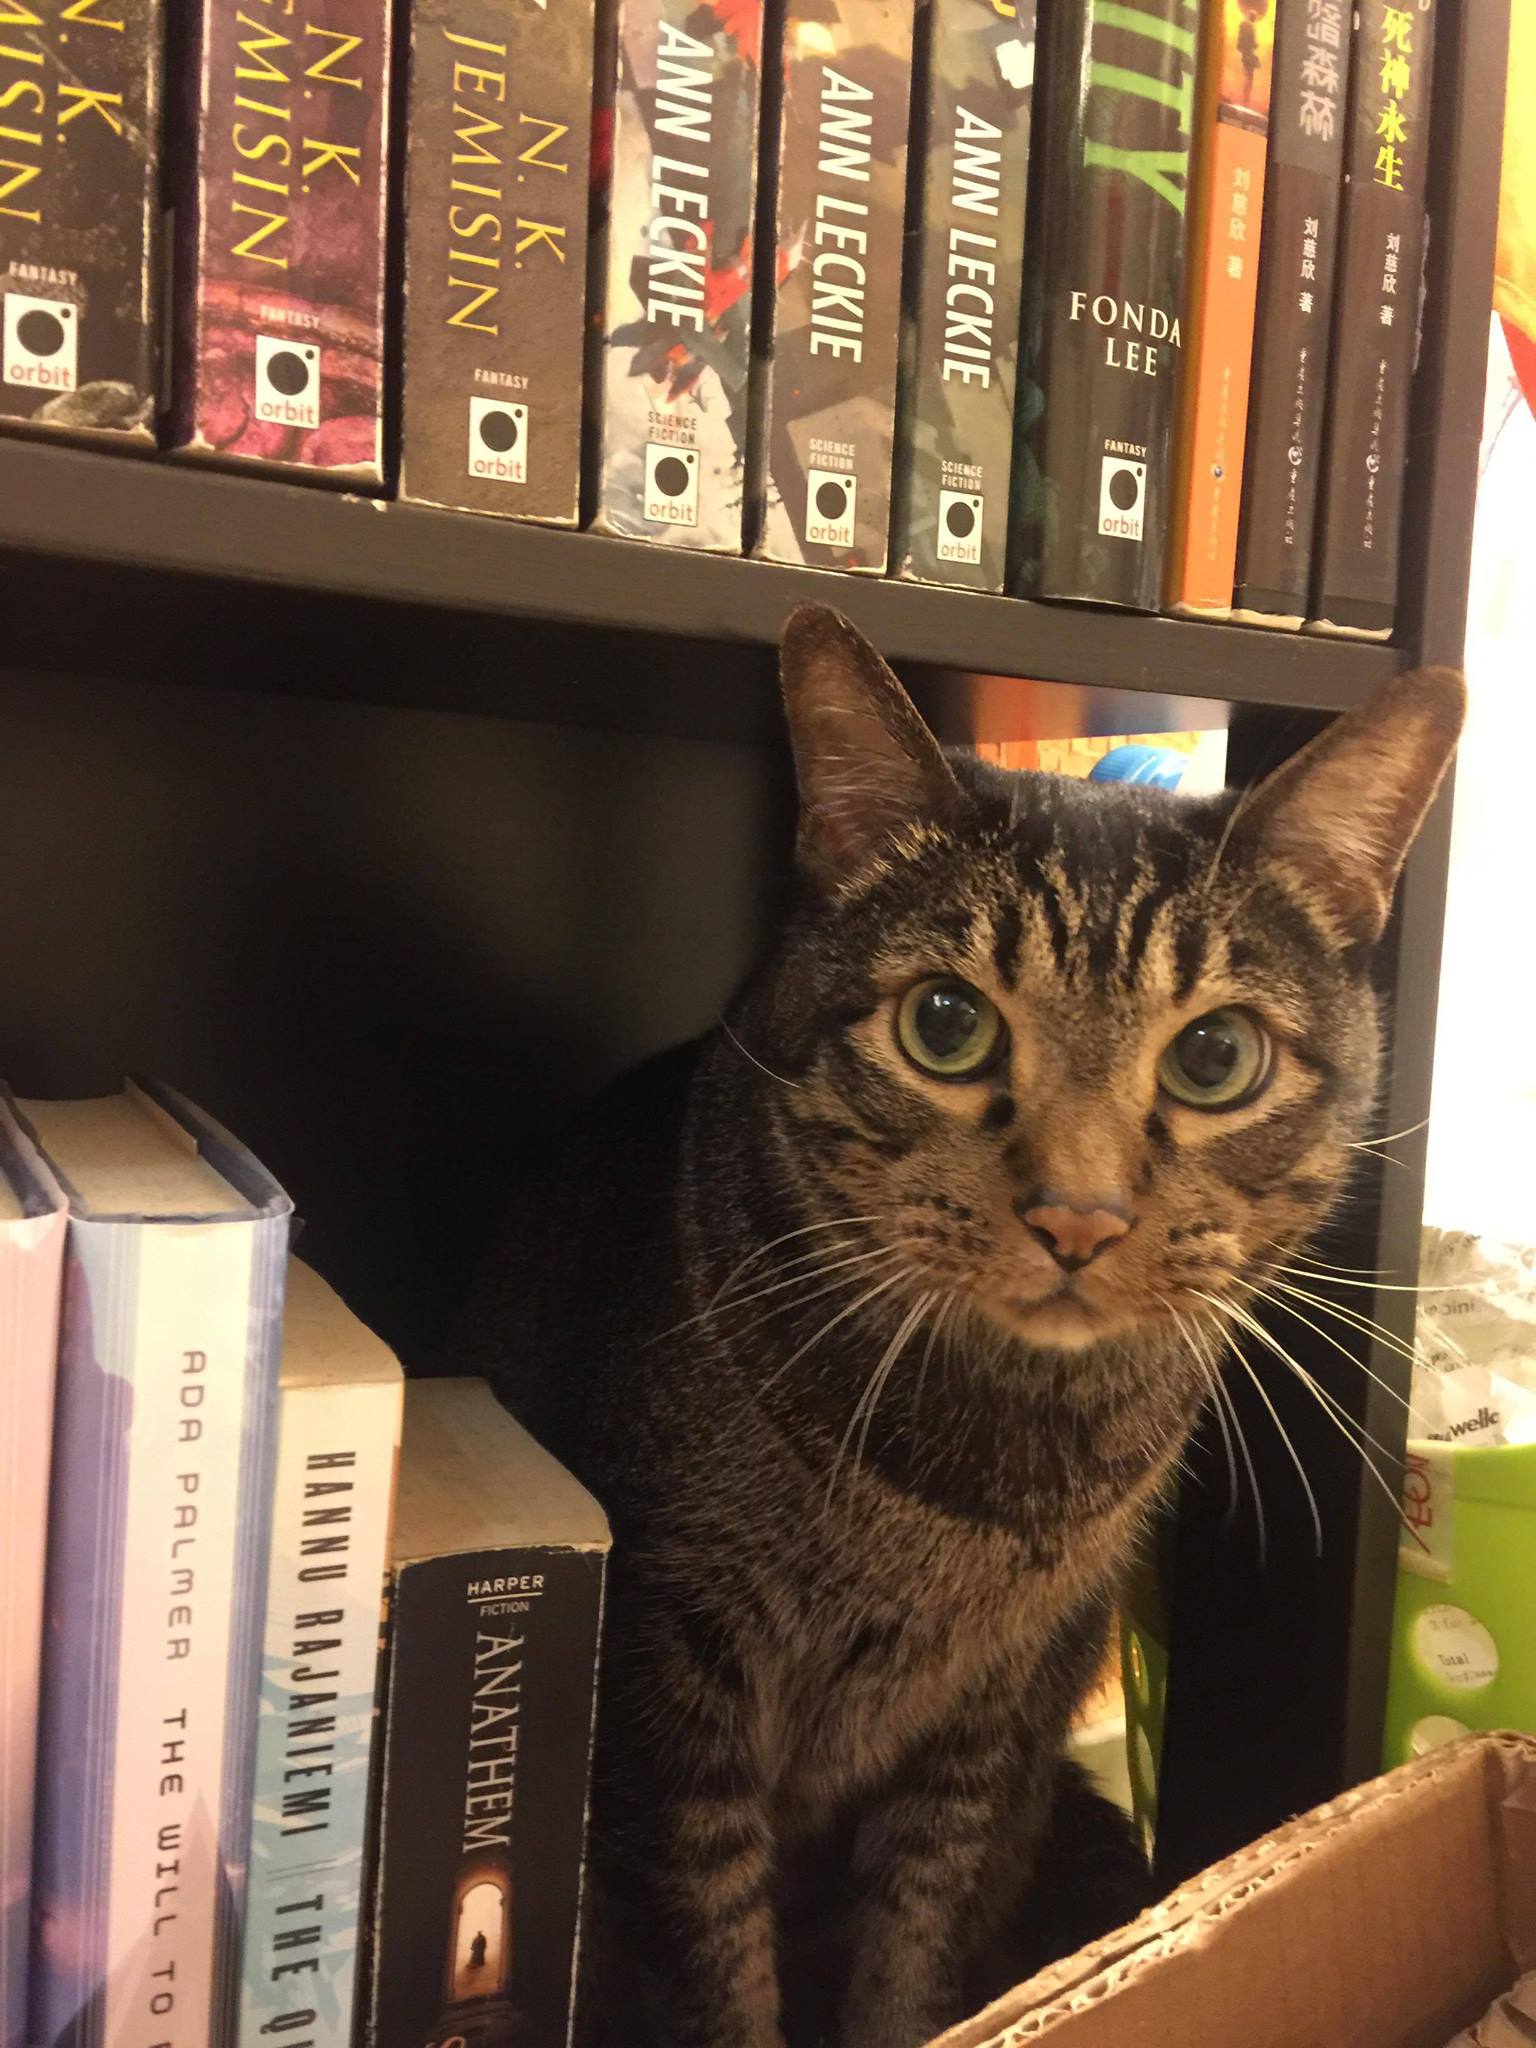 A tabby cat sitting on a bookshelf